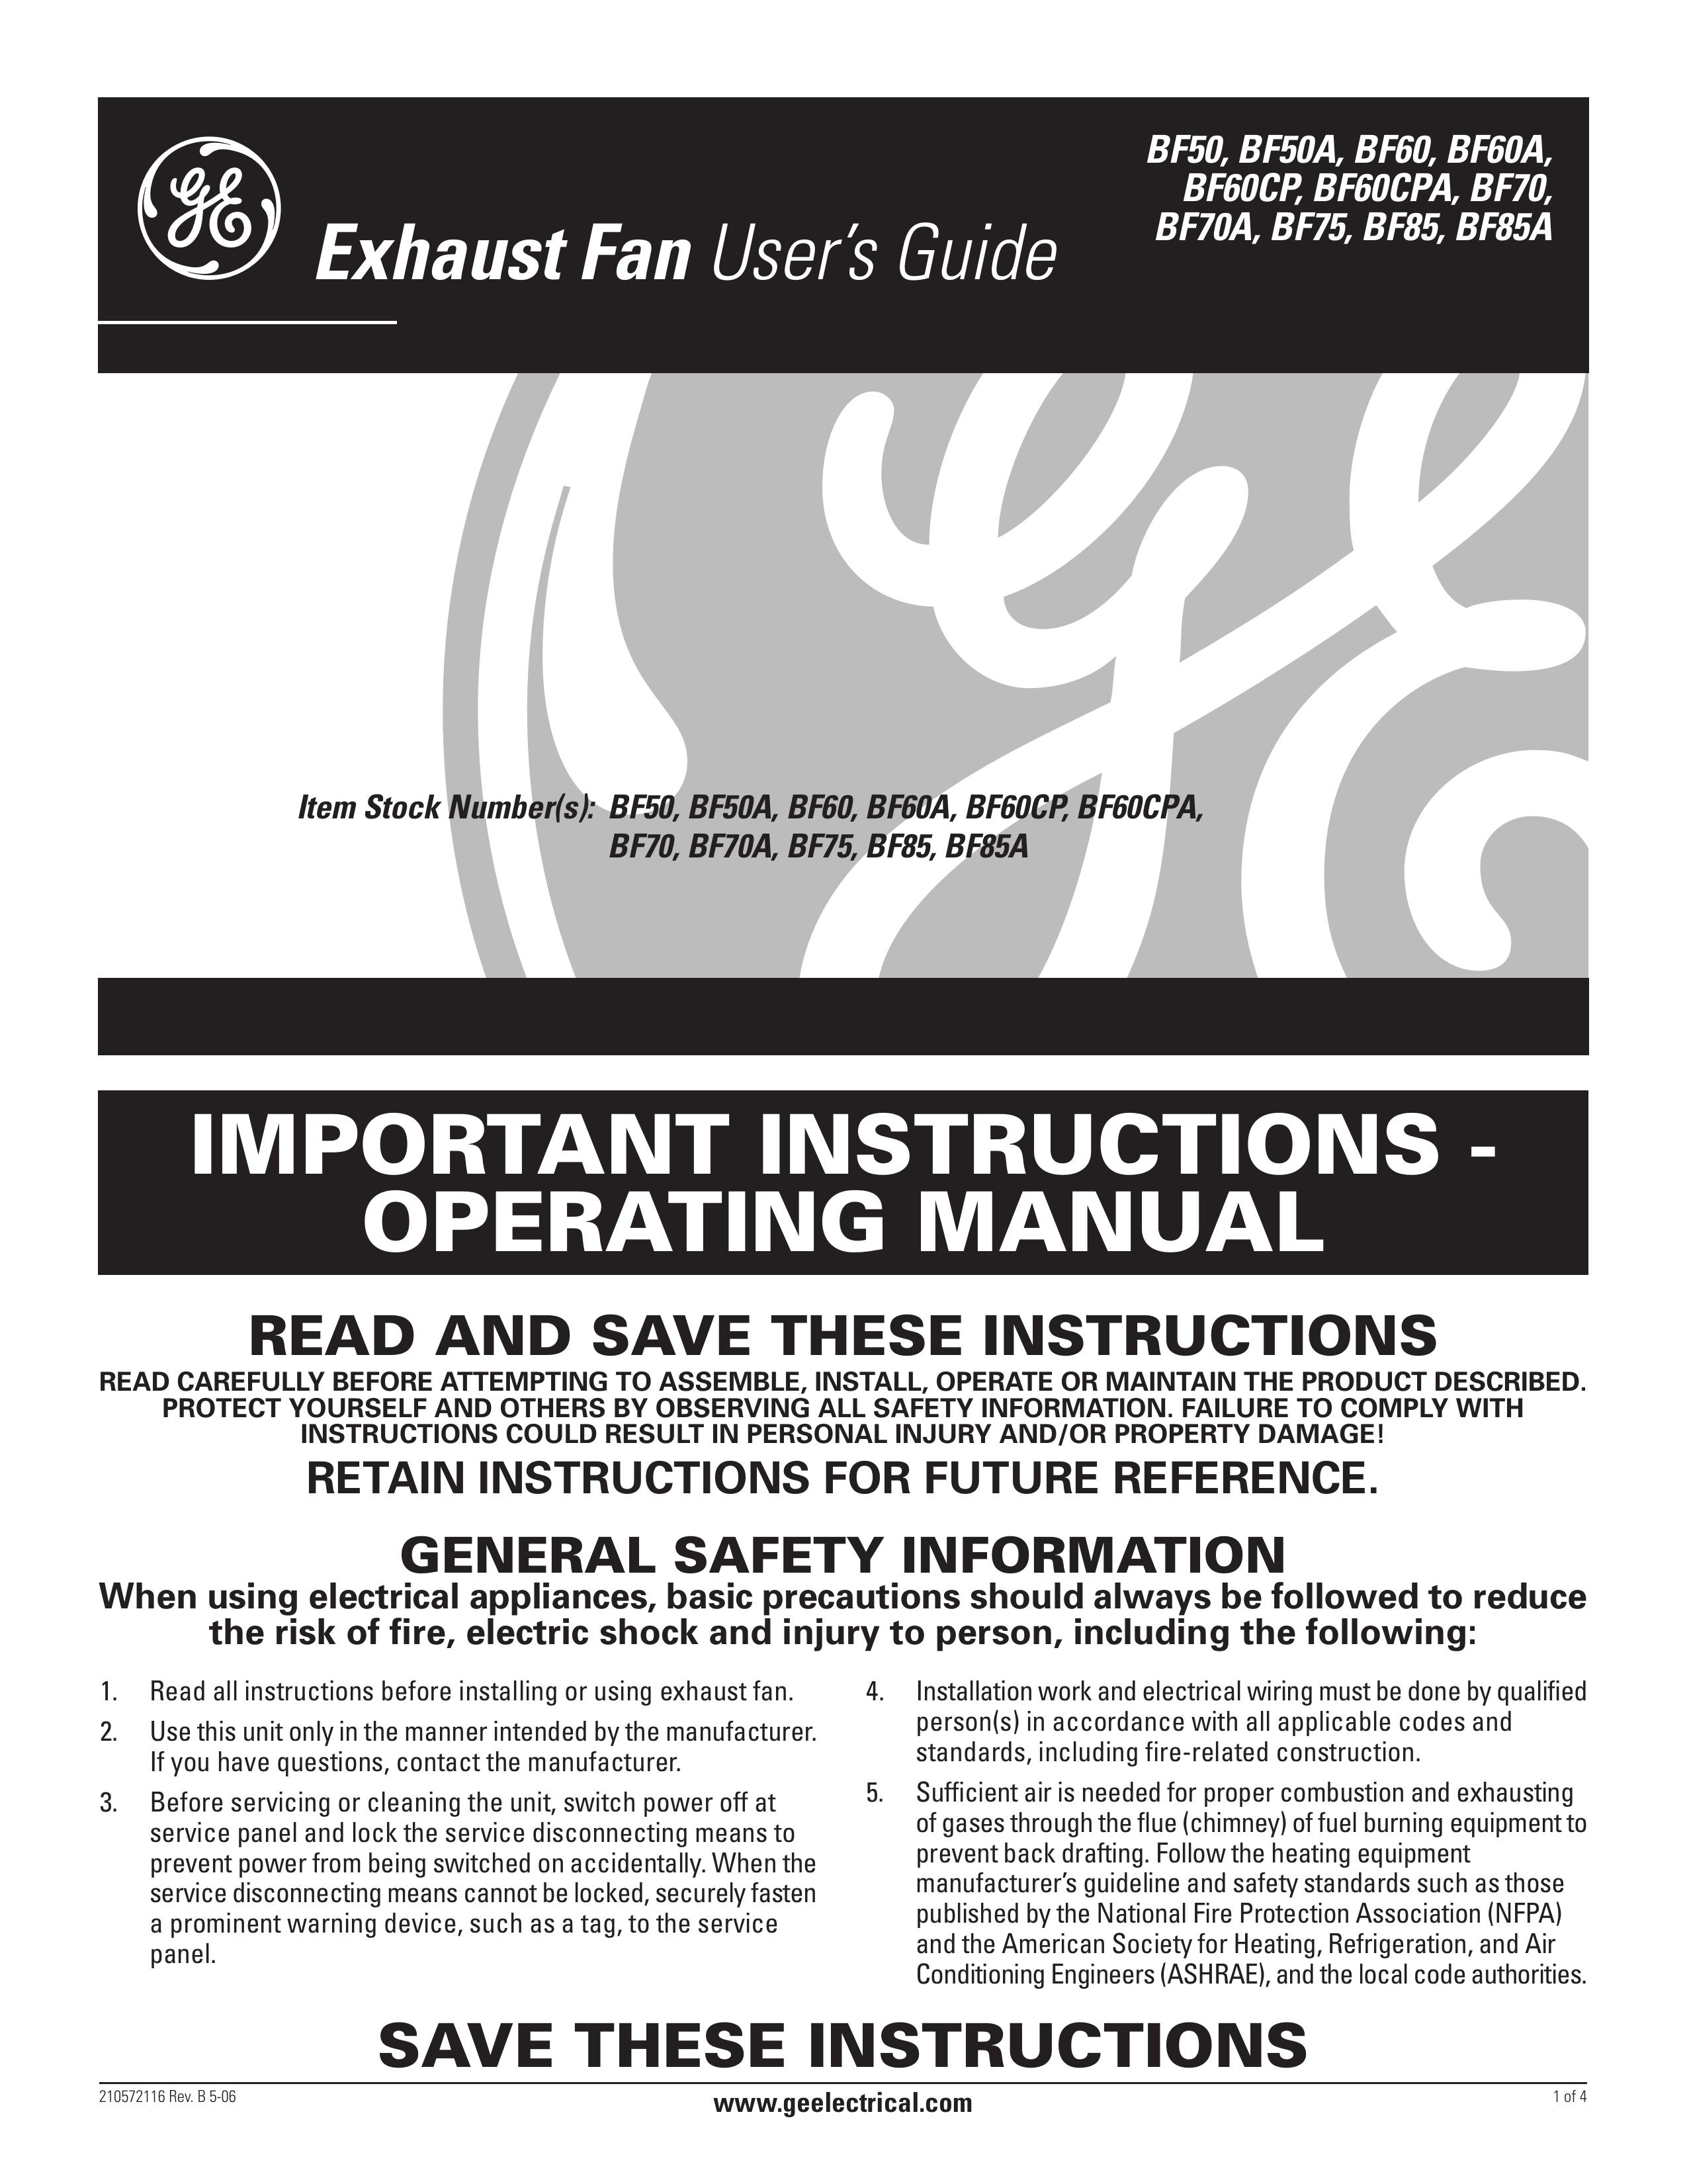 GE BF50A Ventilation Hood User Manual